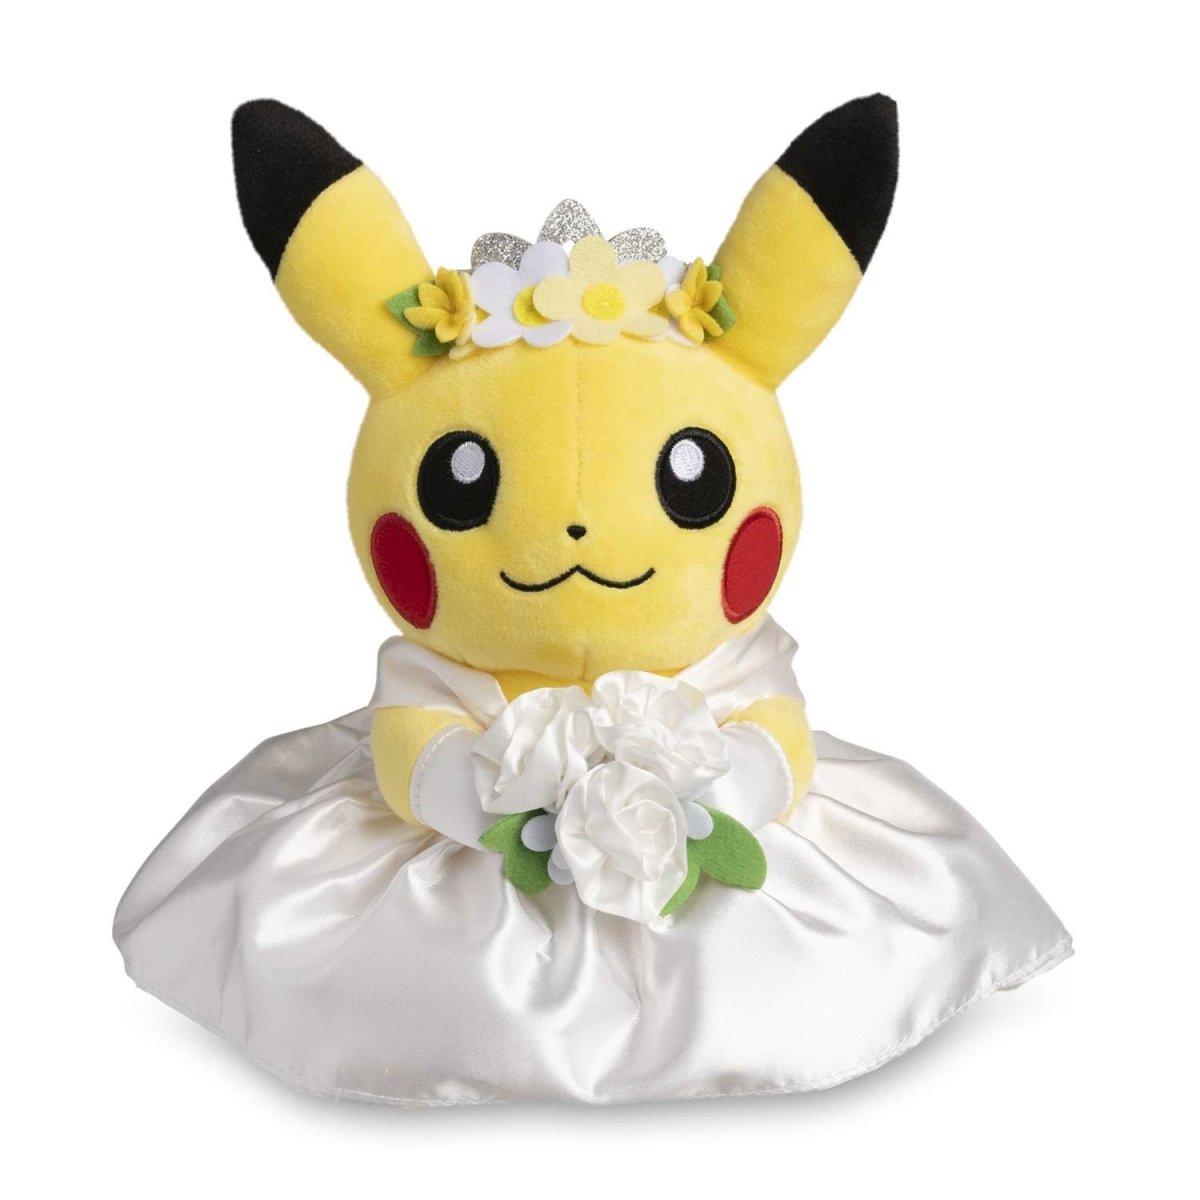 Pikachu Wedding: Wedding Kimono Pikachu (Male) Plush - 9 In